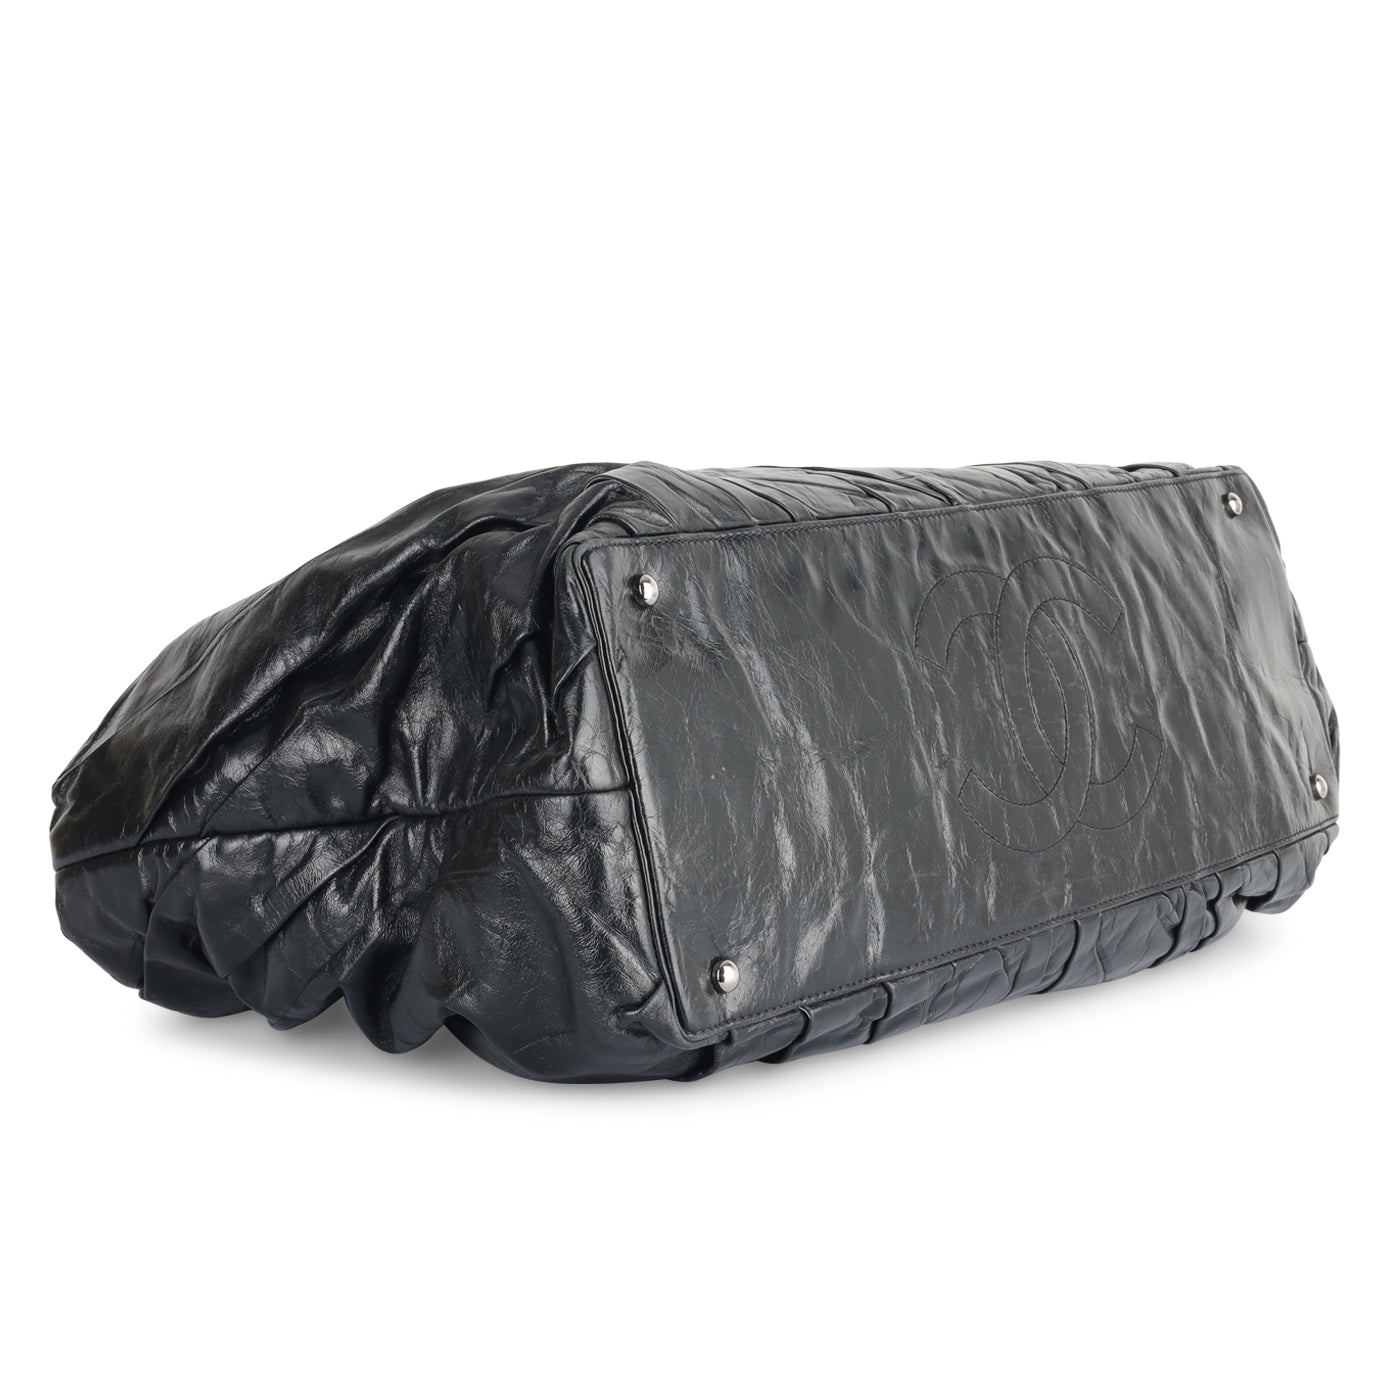 PRADA Tote Nappa Gaufre Black Leather Cross Body Bag Retail $3000